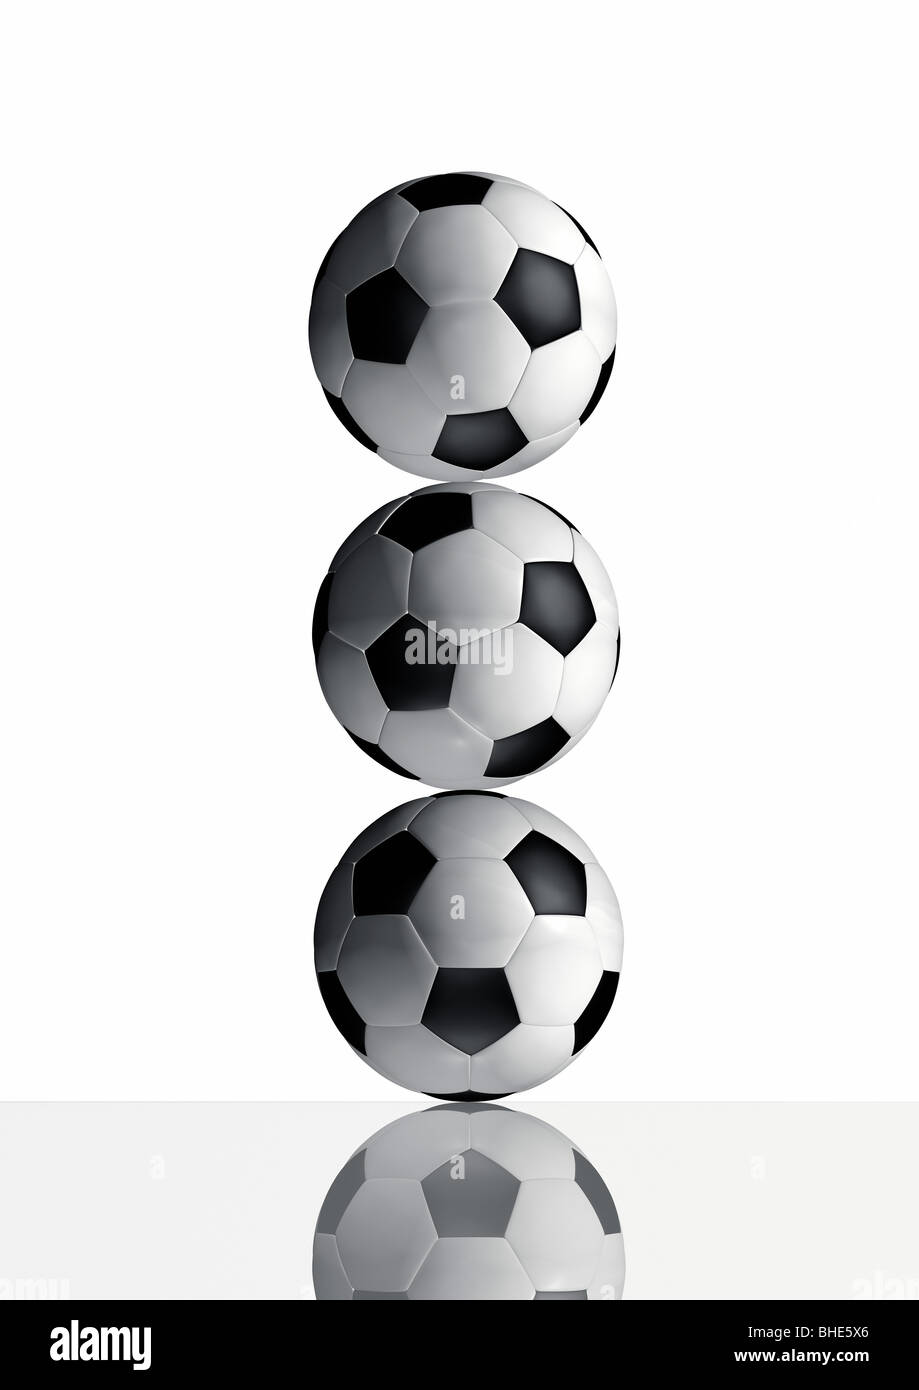 Fußball - ballon de soccer Banque D'Images